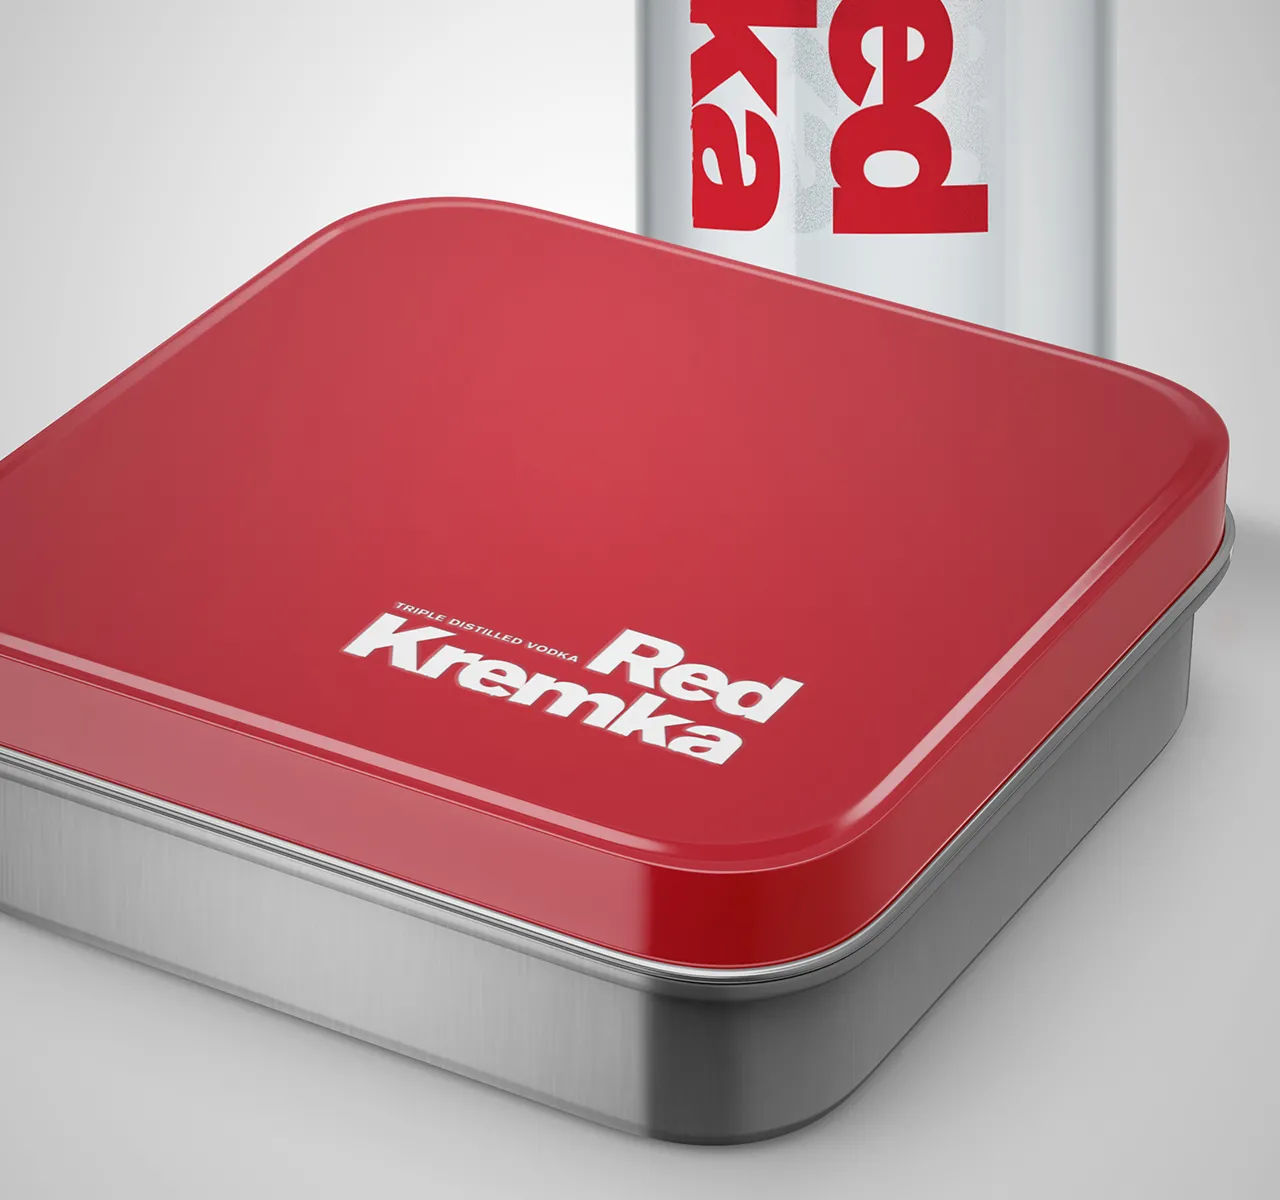 metal printed tin, vodka brand guidelines tin case box, red lid box